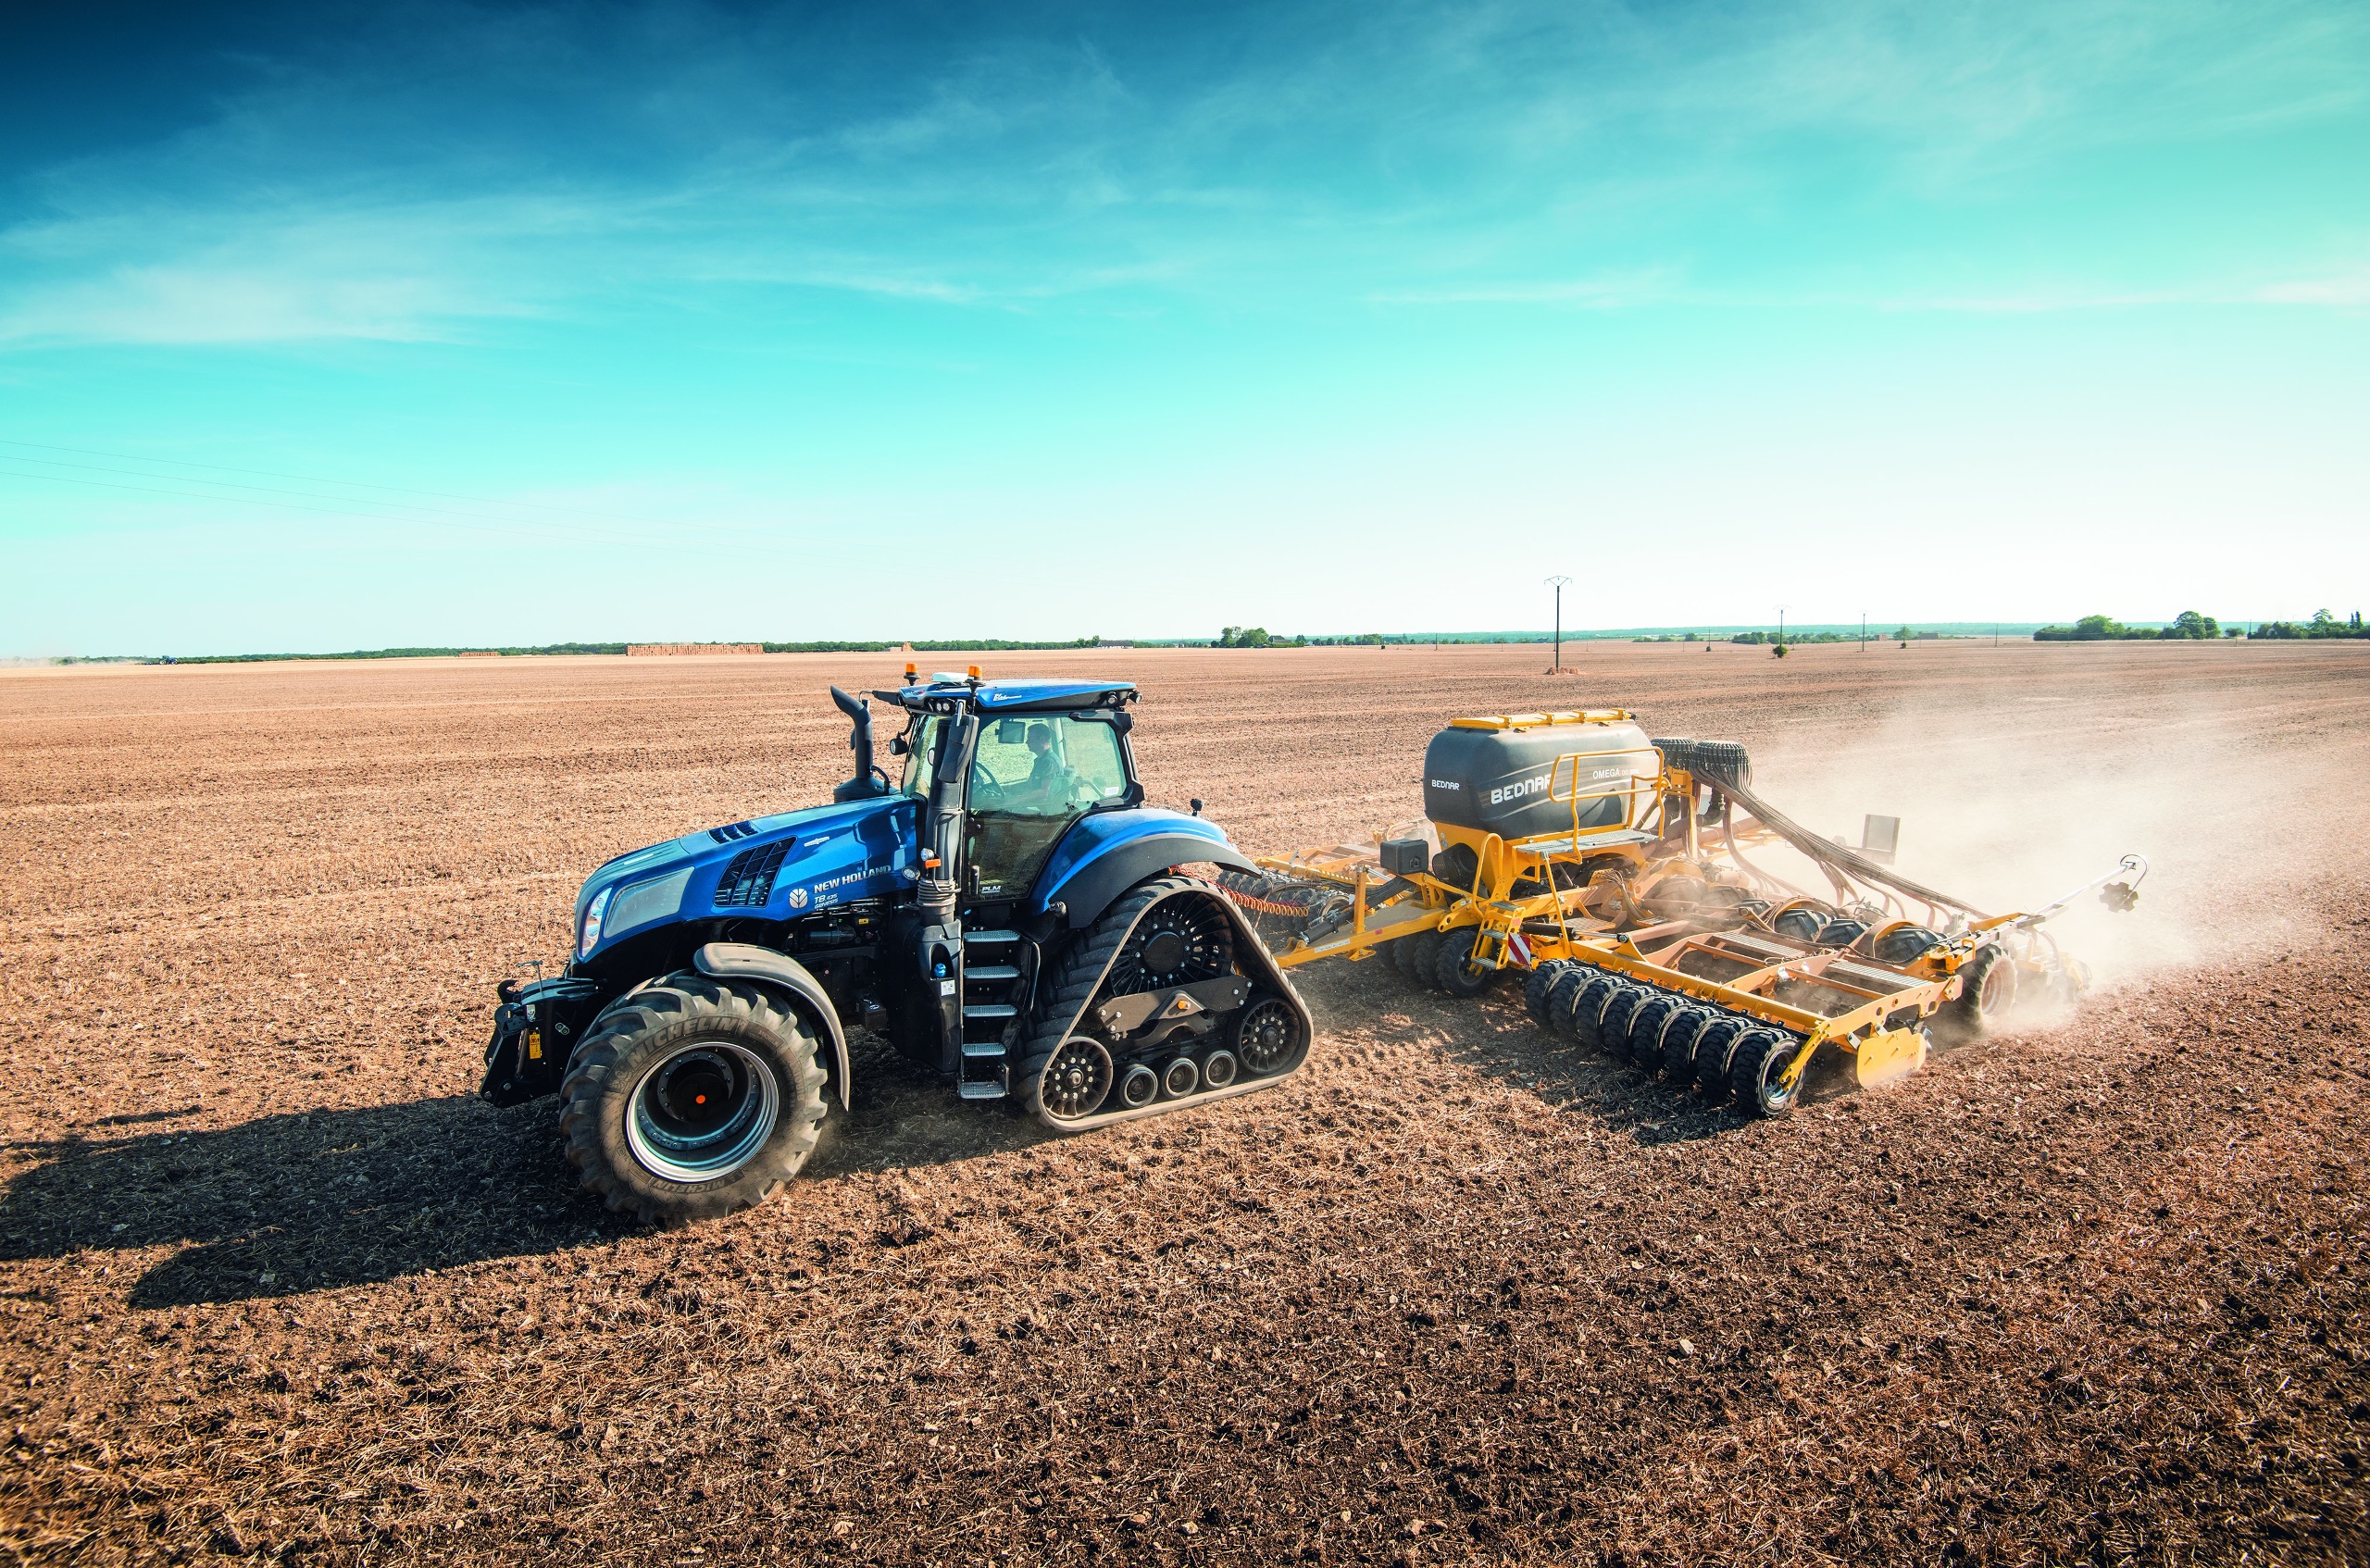 General 2560x1694 tractors field vehicle farming machine heavy equipment